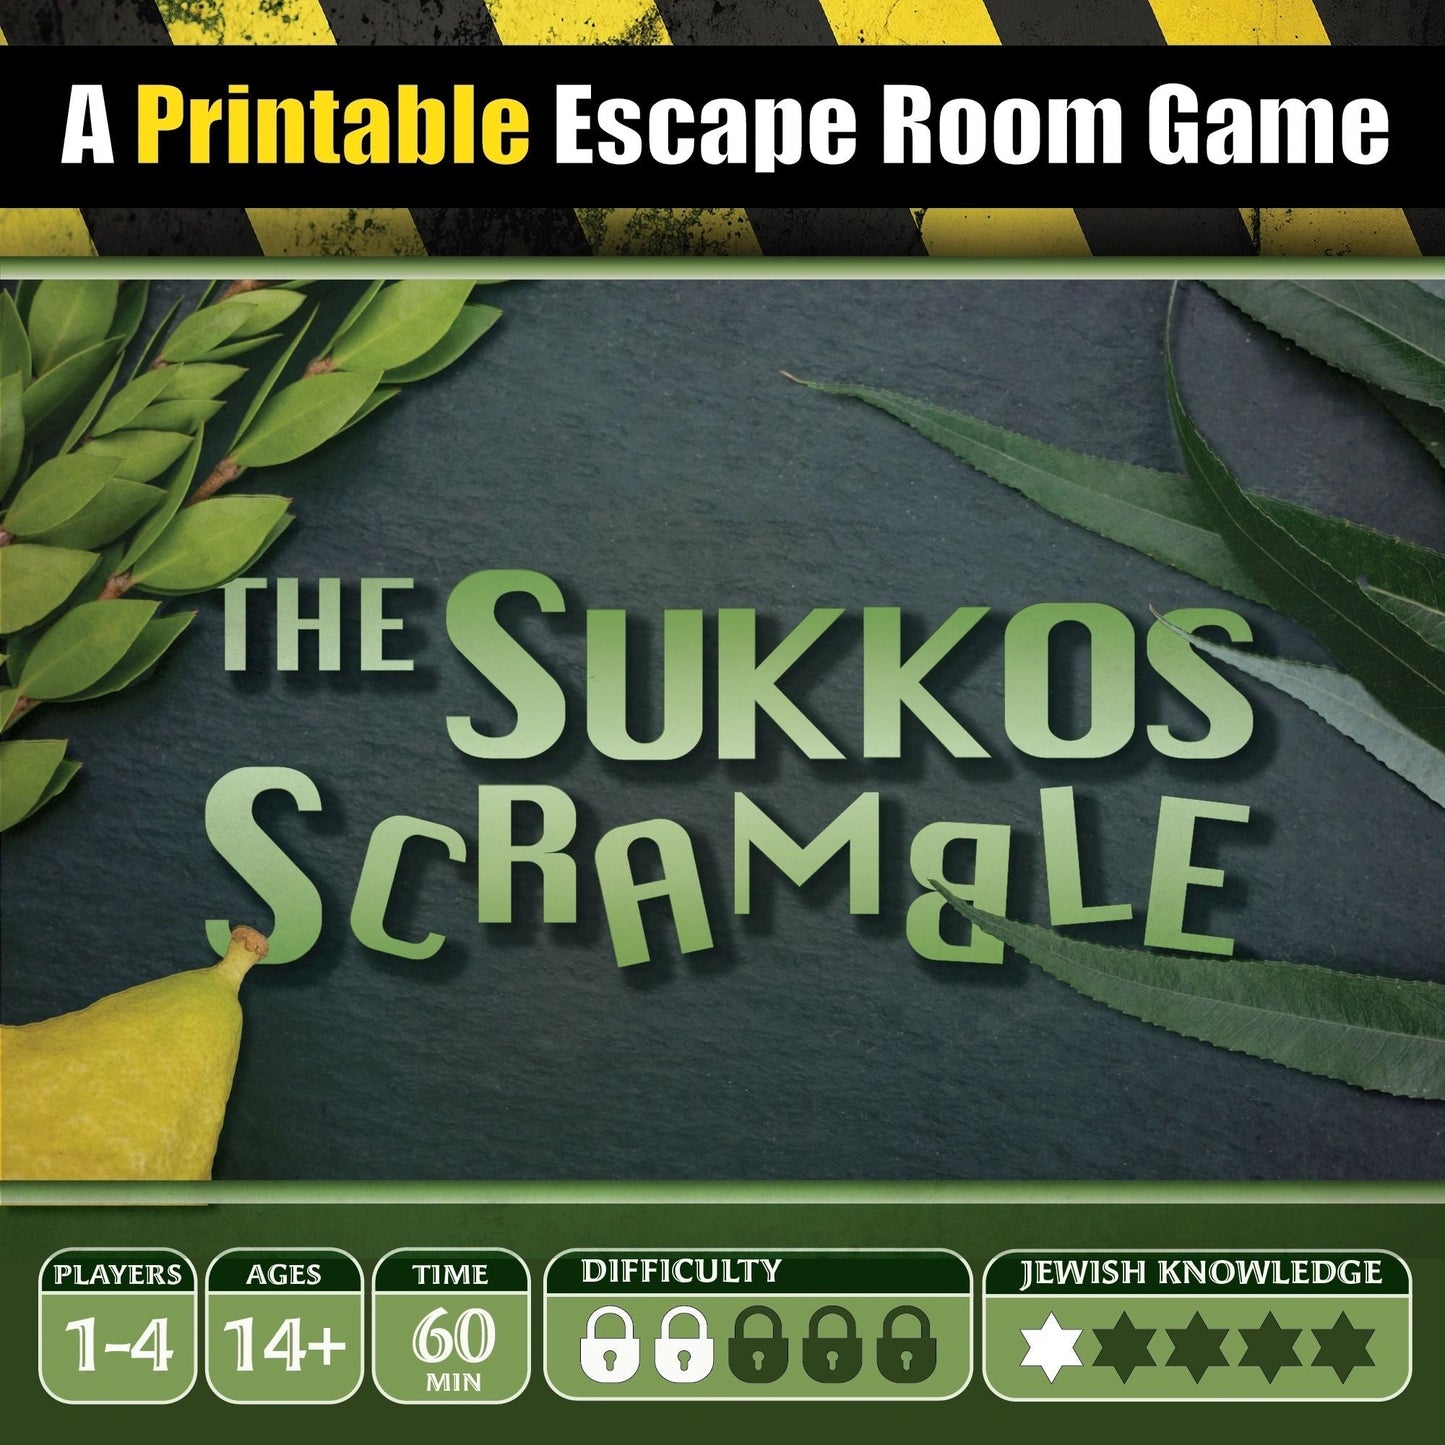 The Sukkos Scramble